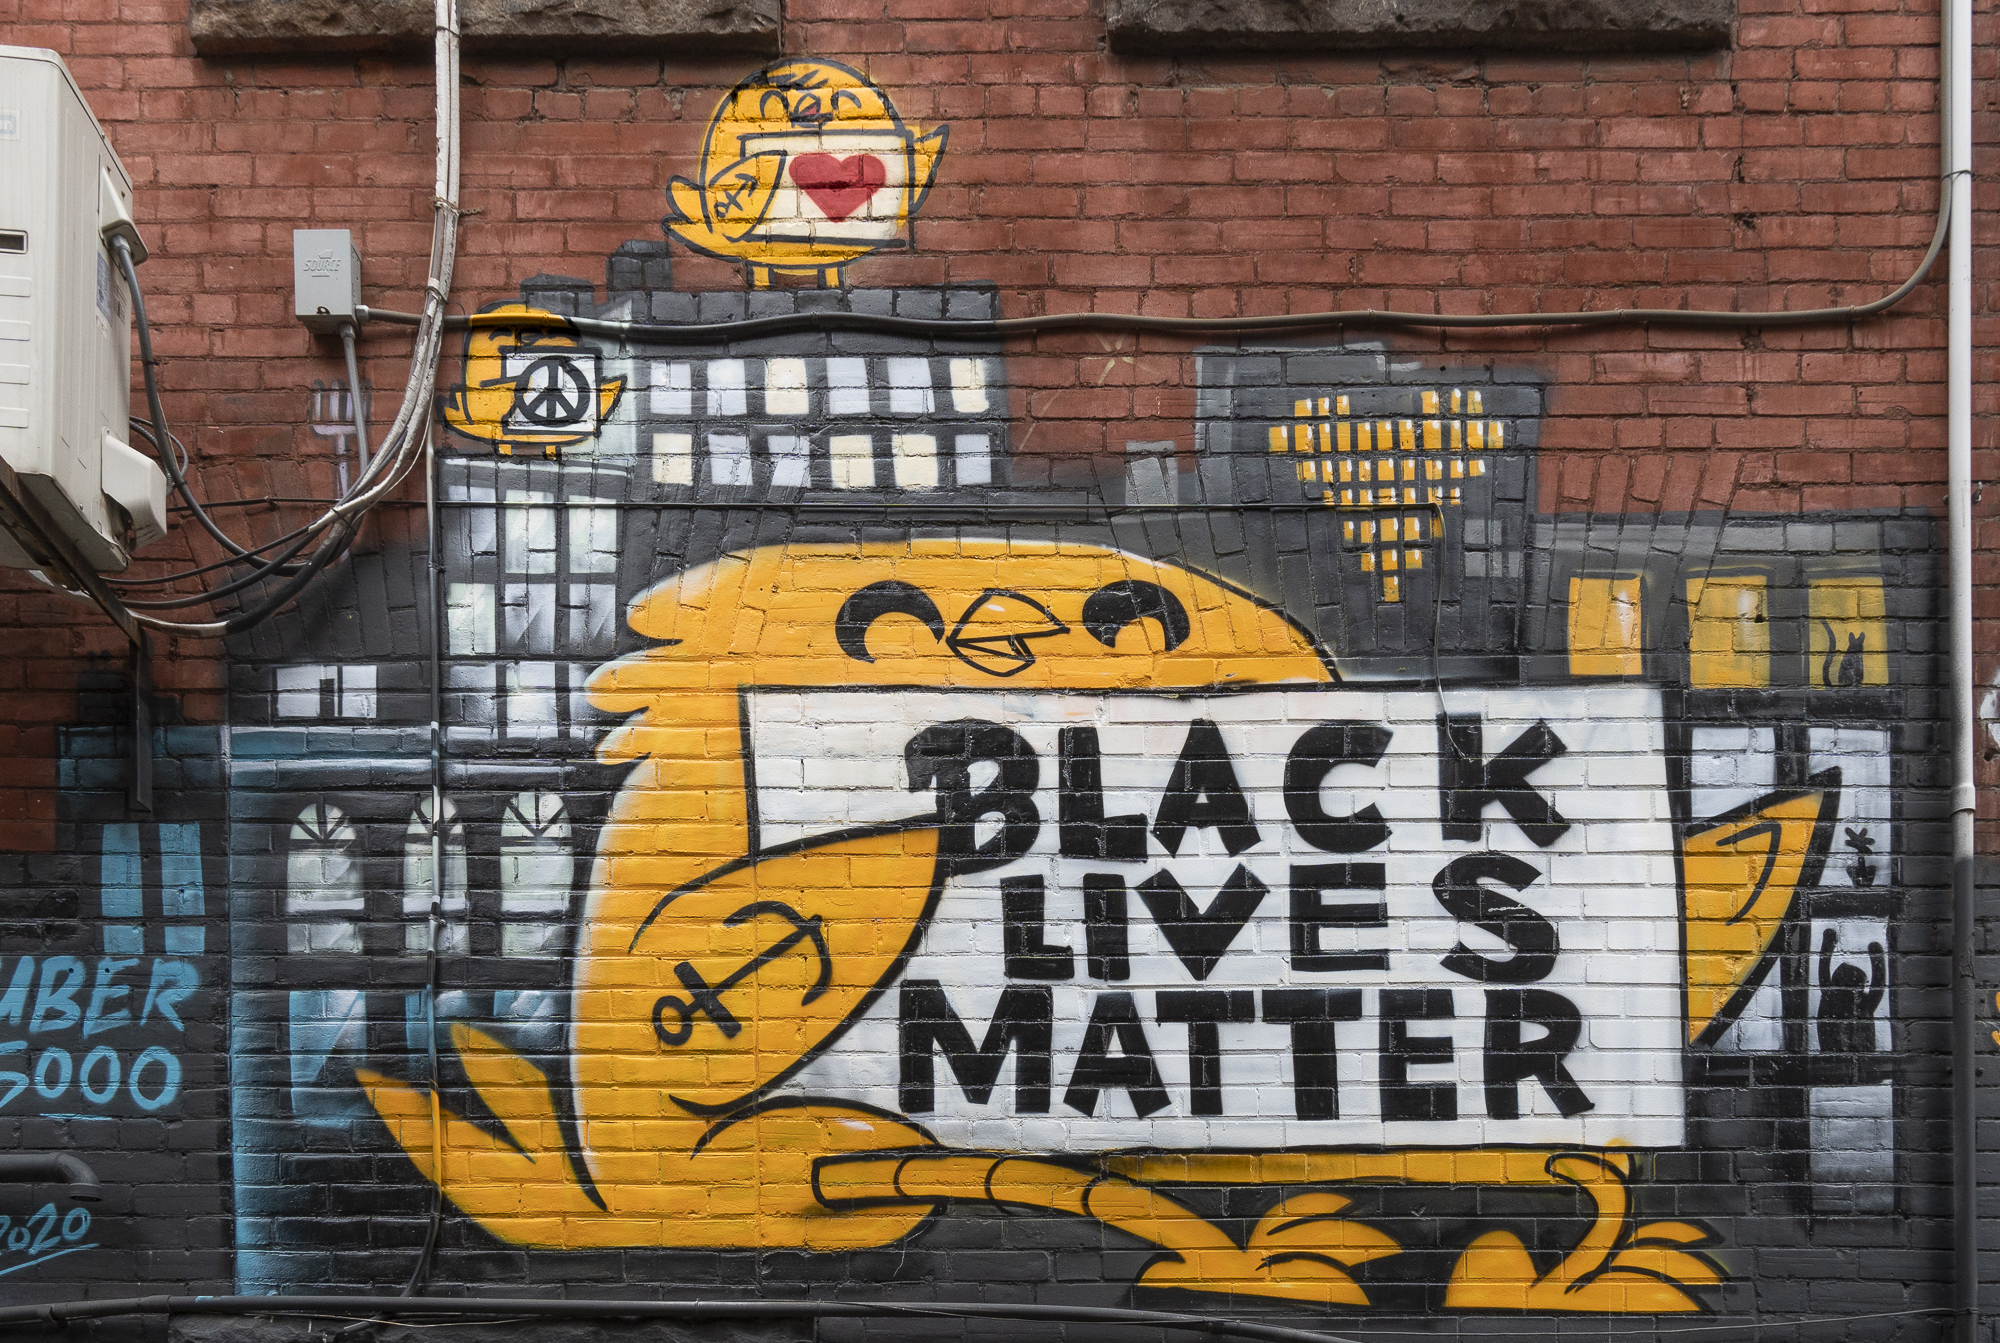 Figure 21. Black Lives Matter; Artist: Uber5000